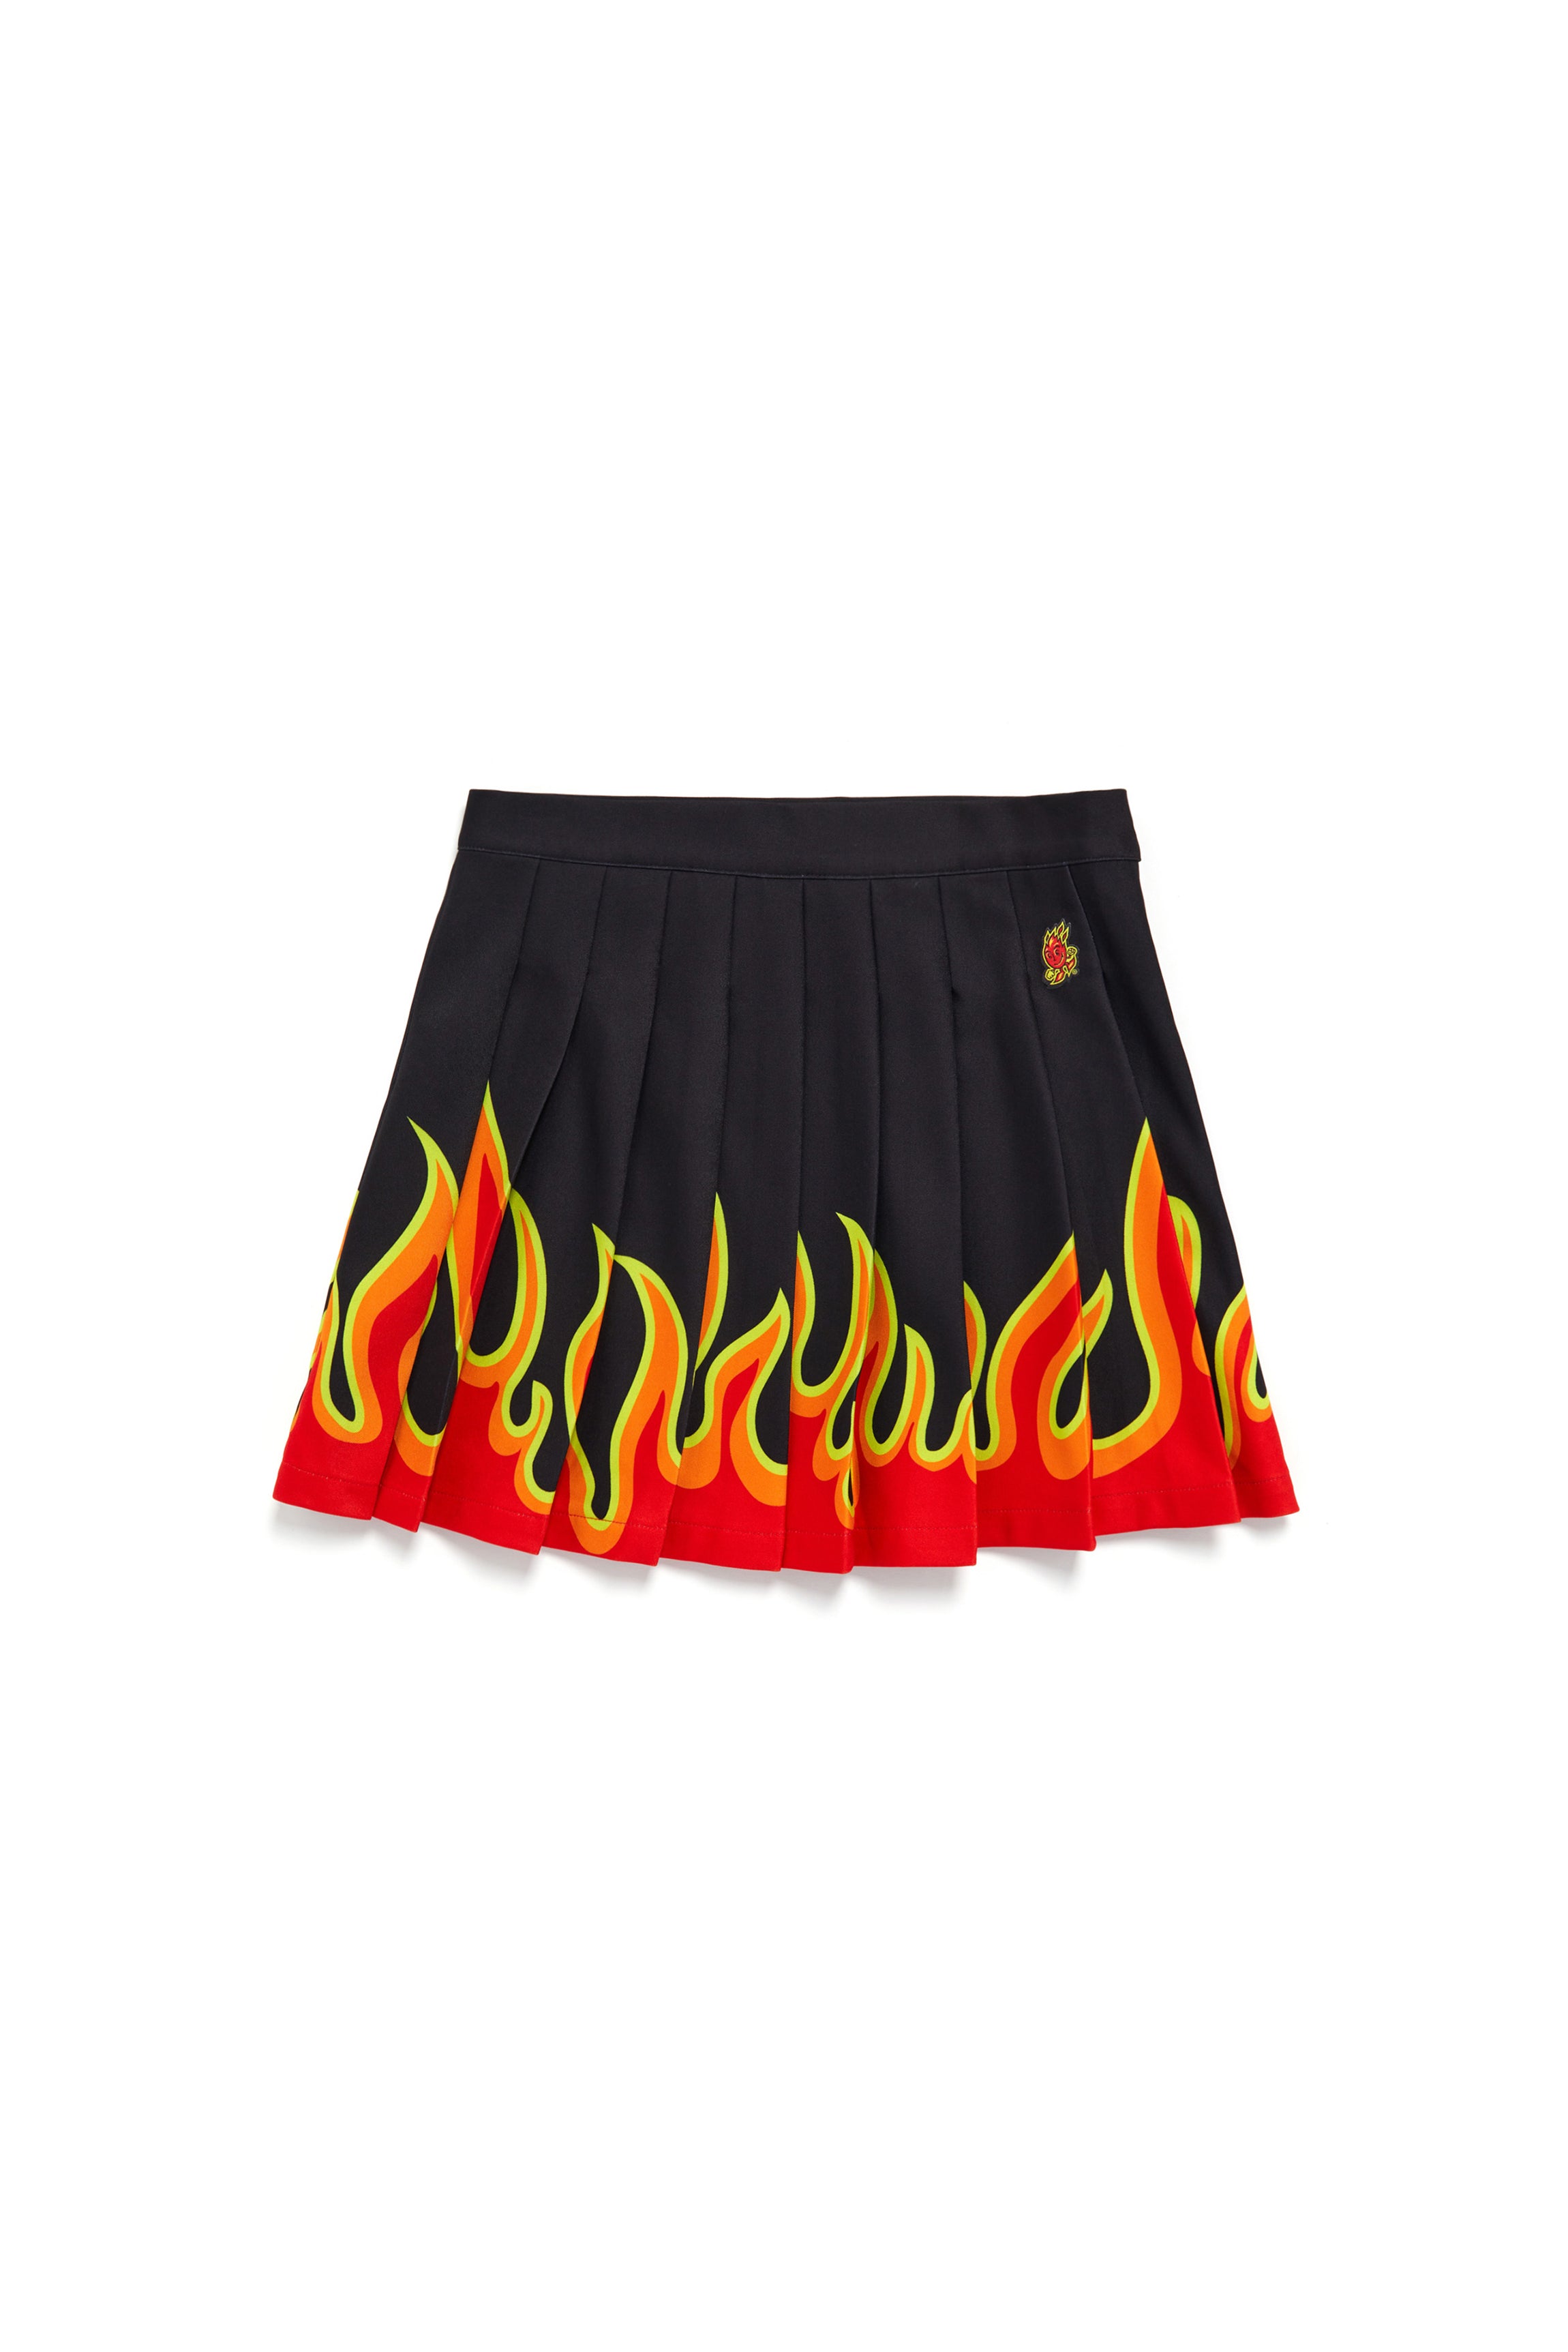 Miami Heat Skirt Set (S6) – TAGS BOUTIQUE